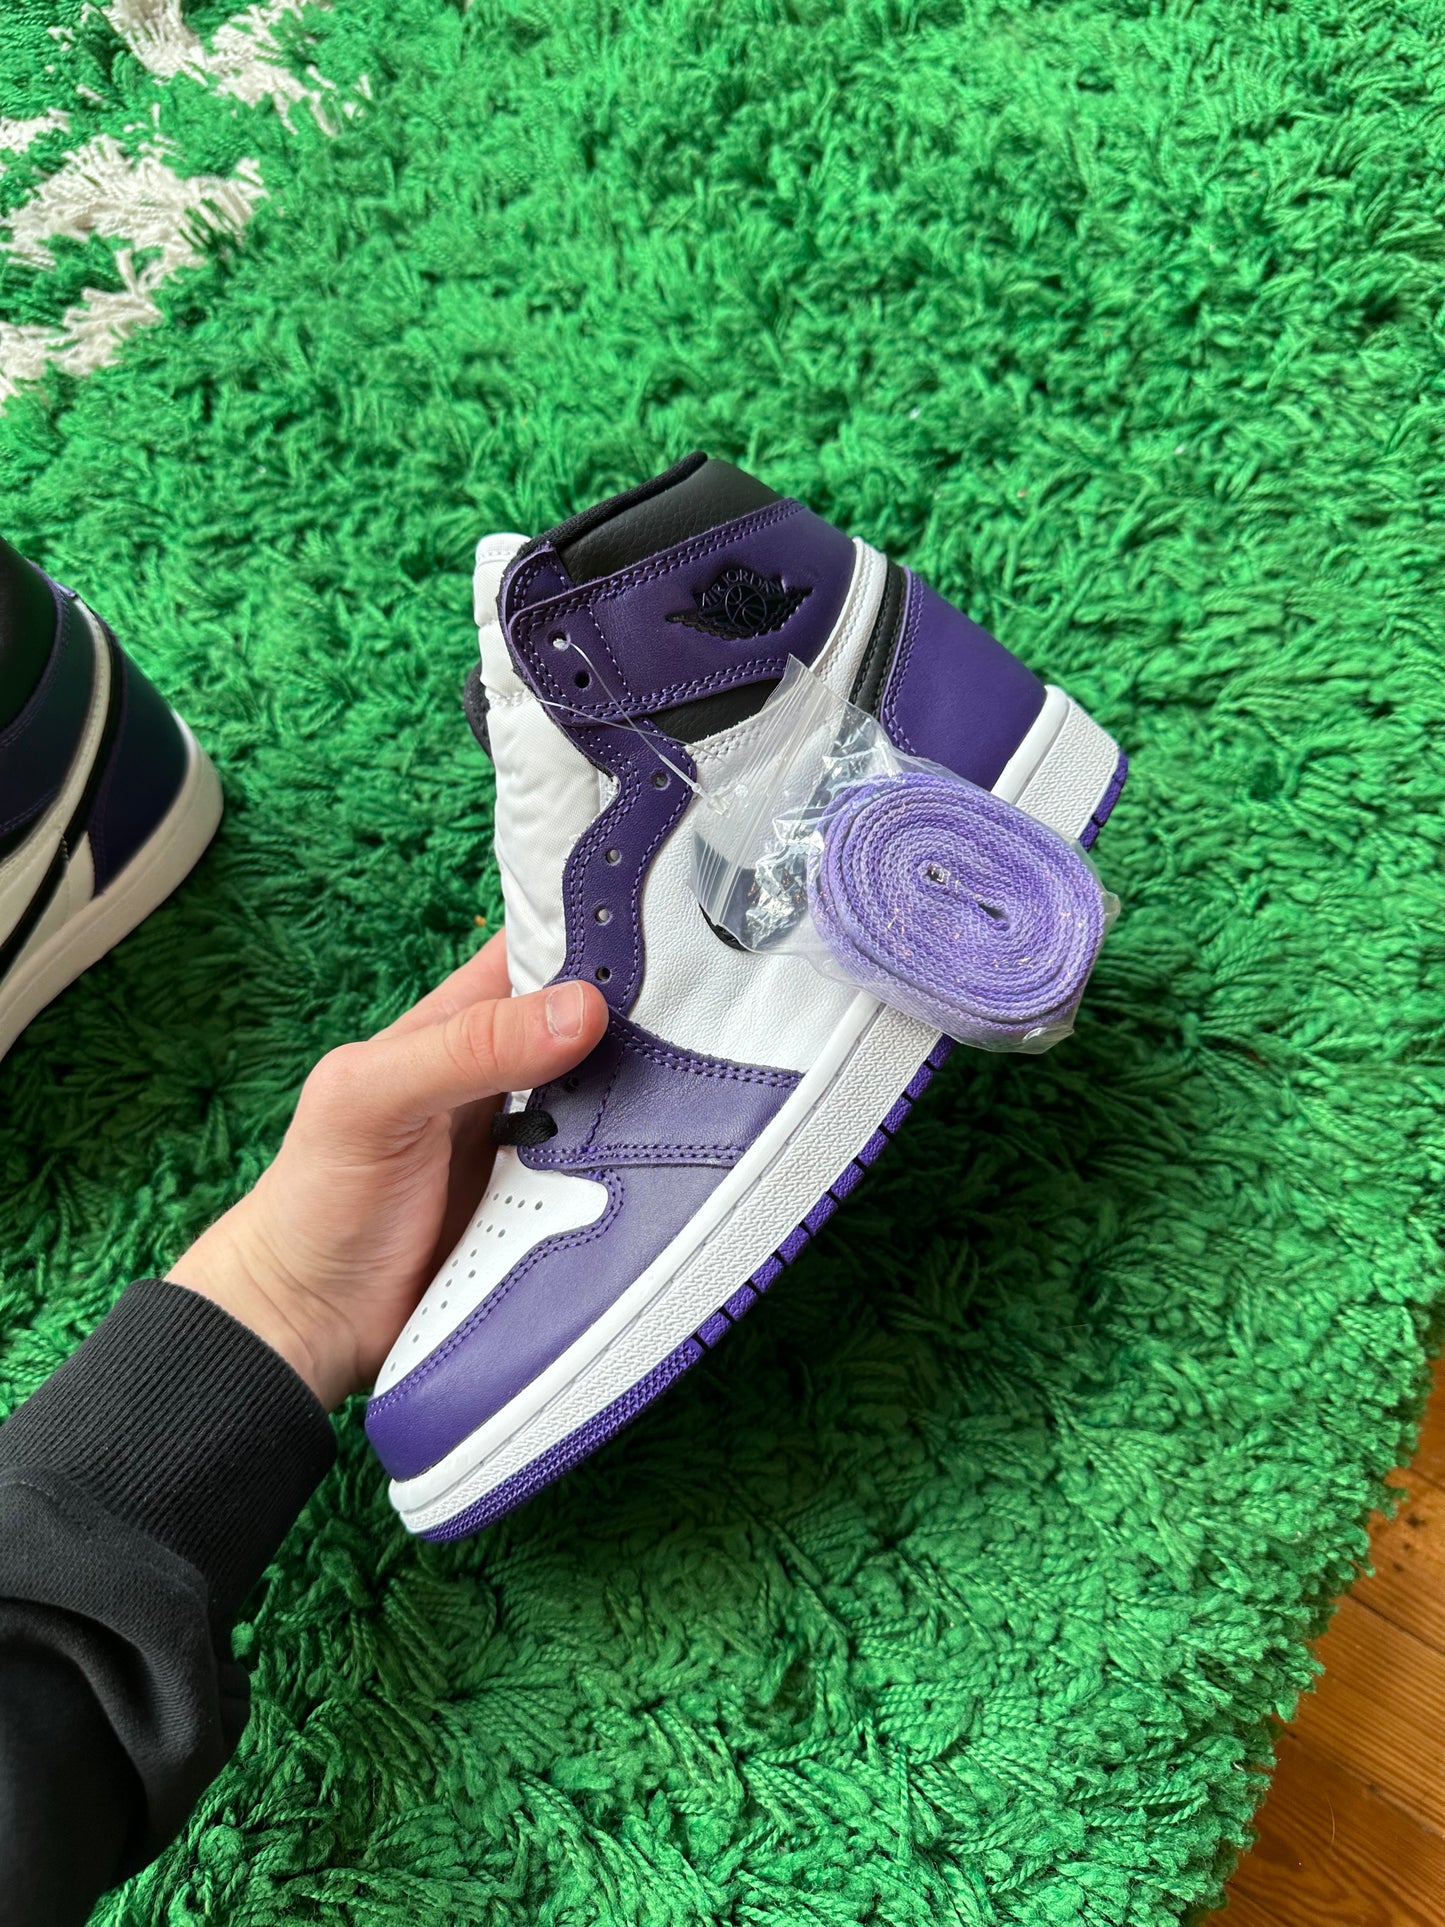 Jordan 1 High “Court Purple White”